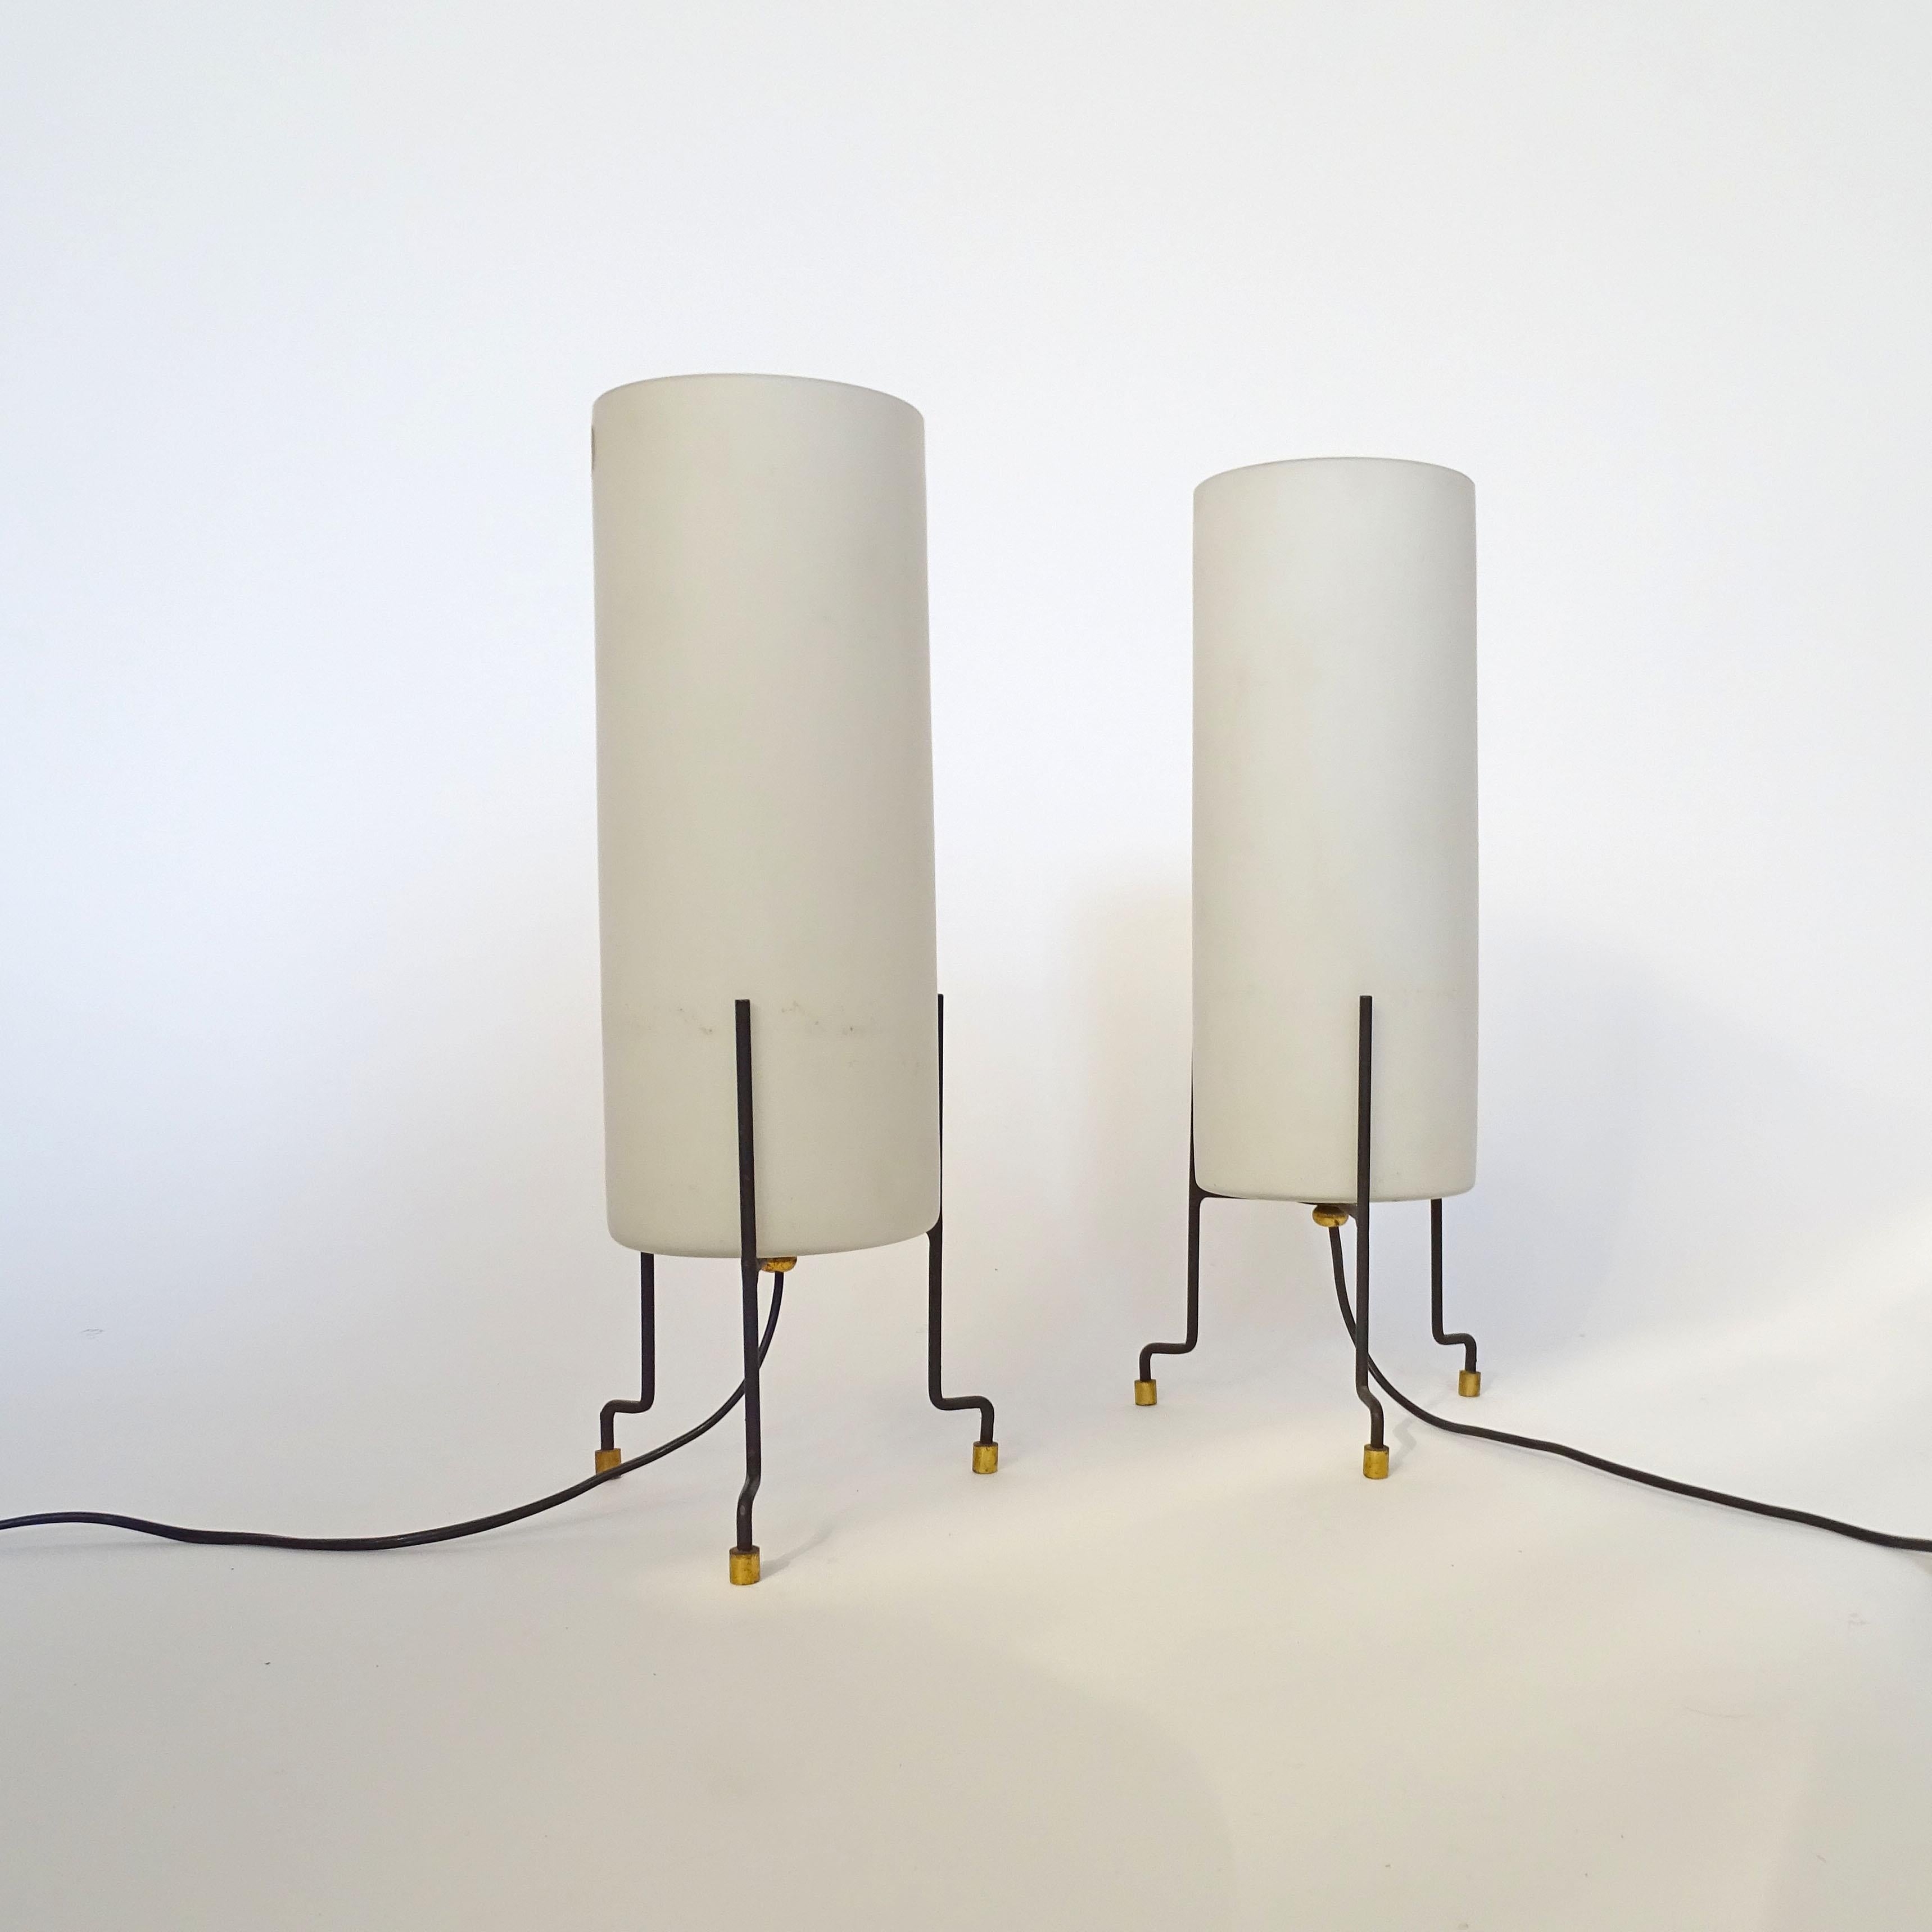 Splendid pair of Italian 1950s minimalistic table lamps.
